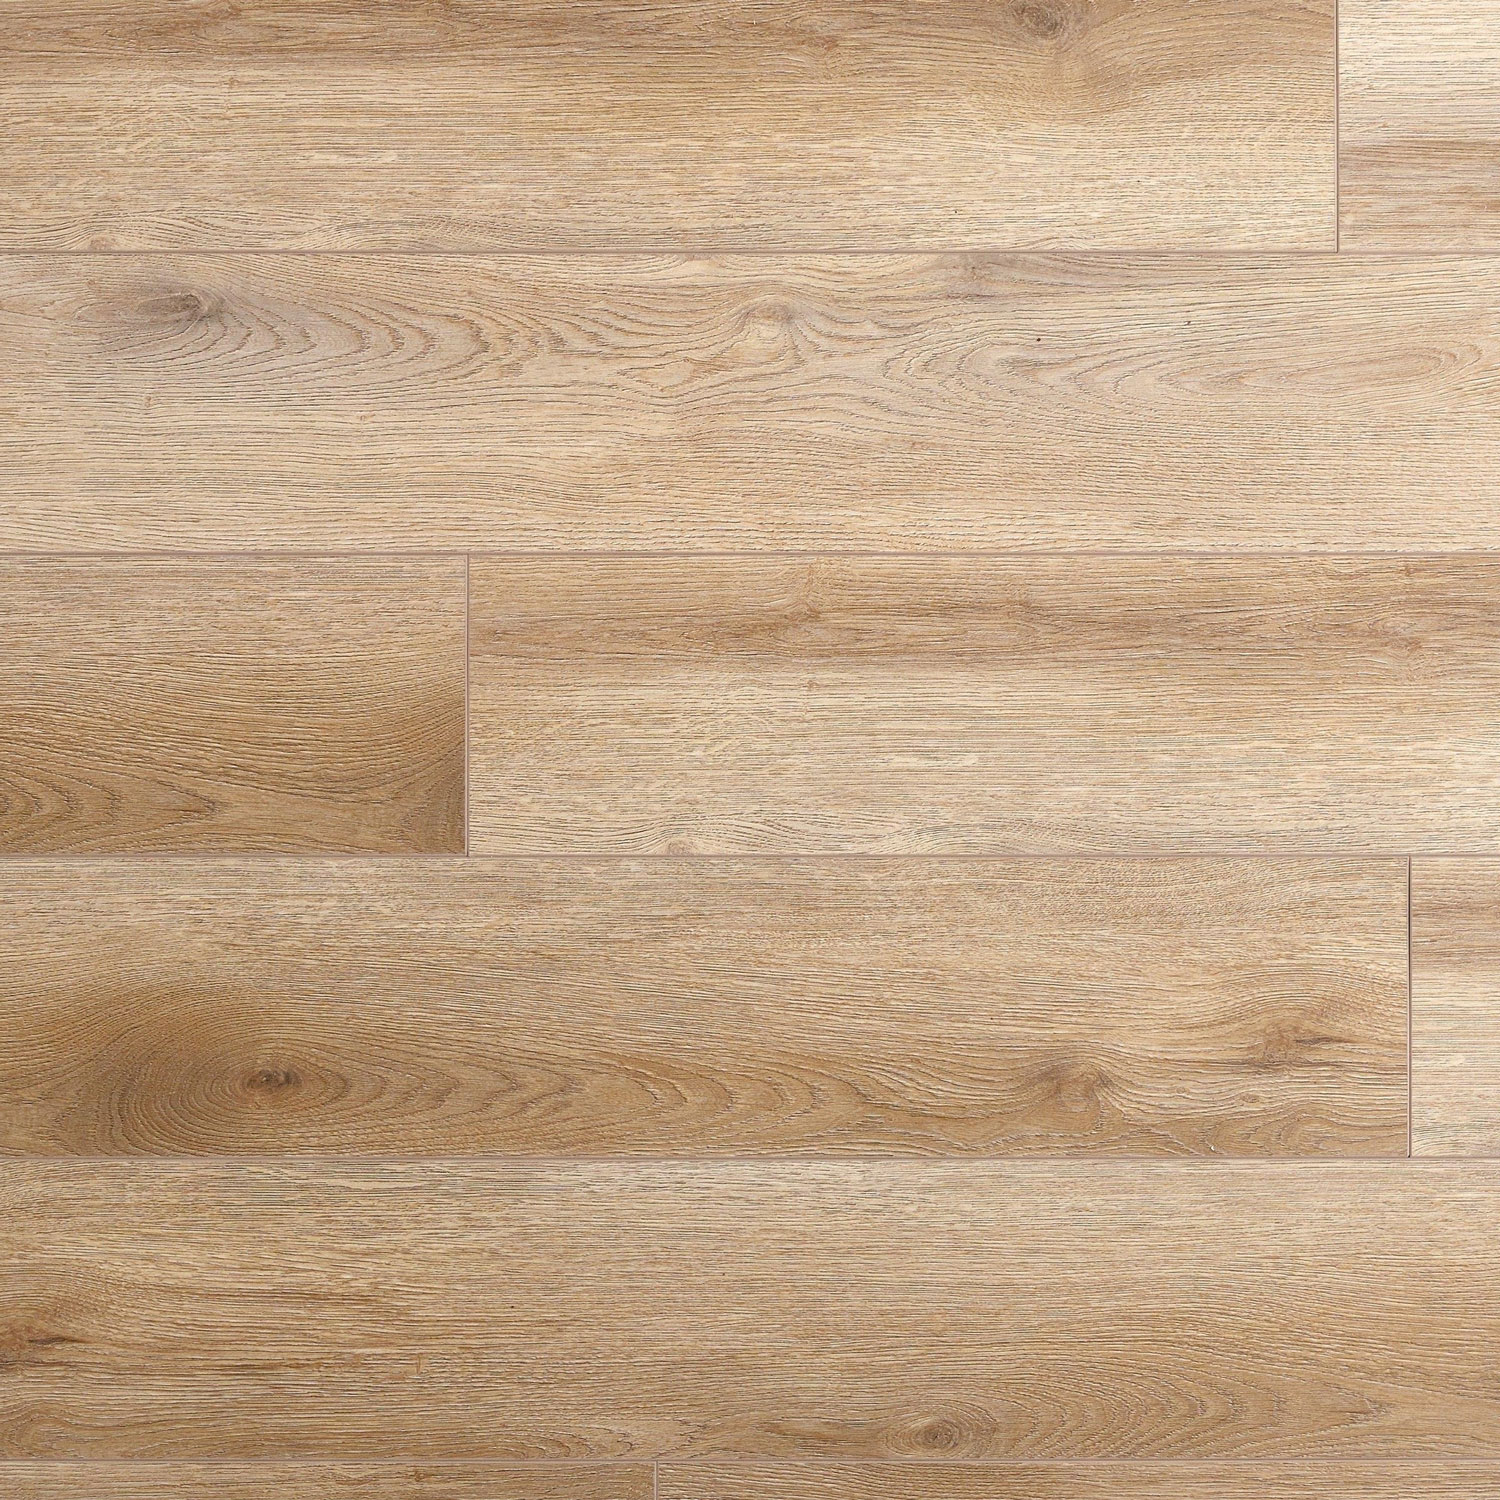 Up close photo of oak wood flooring